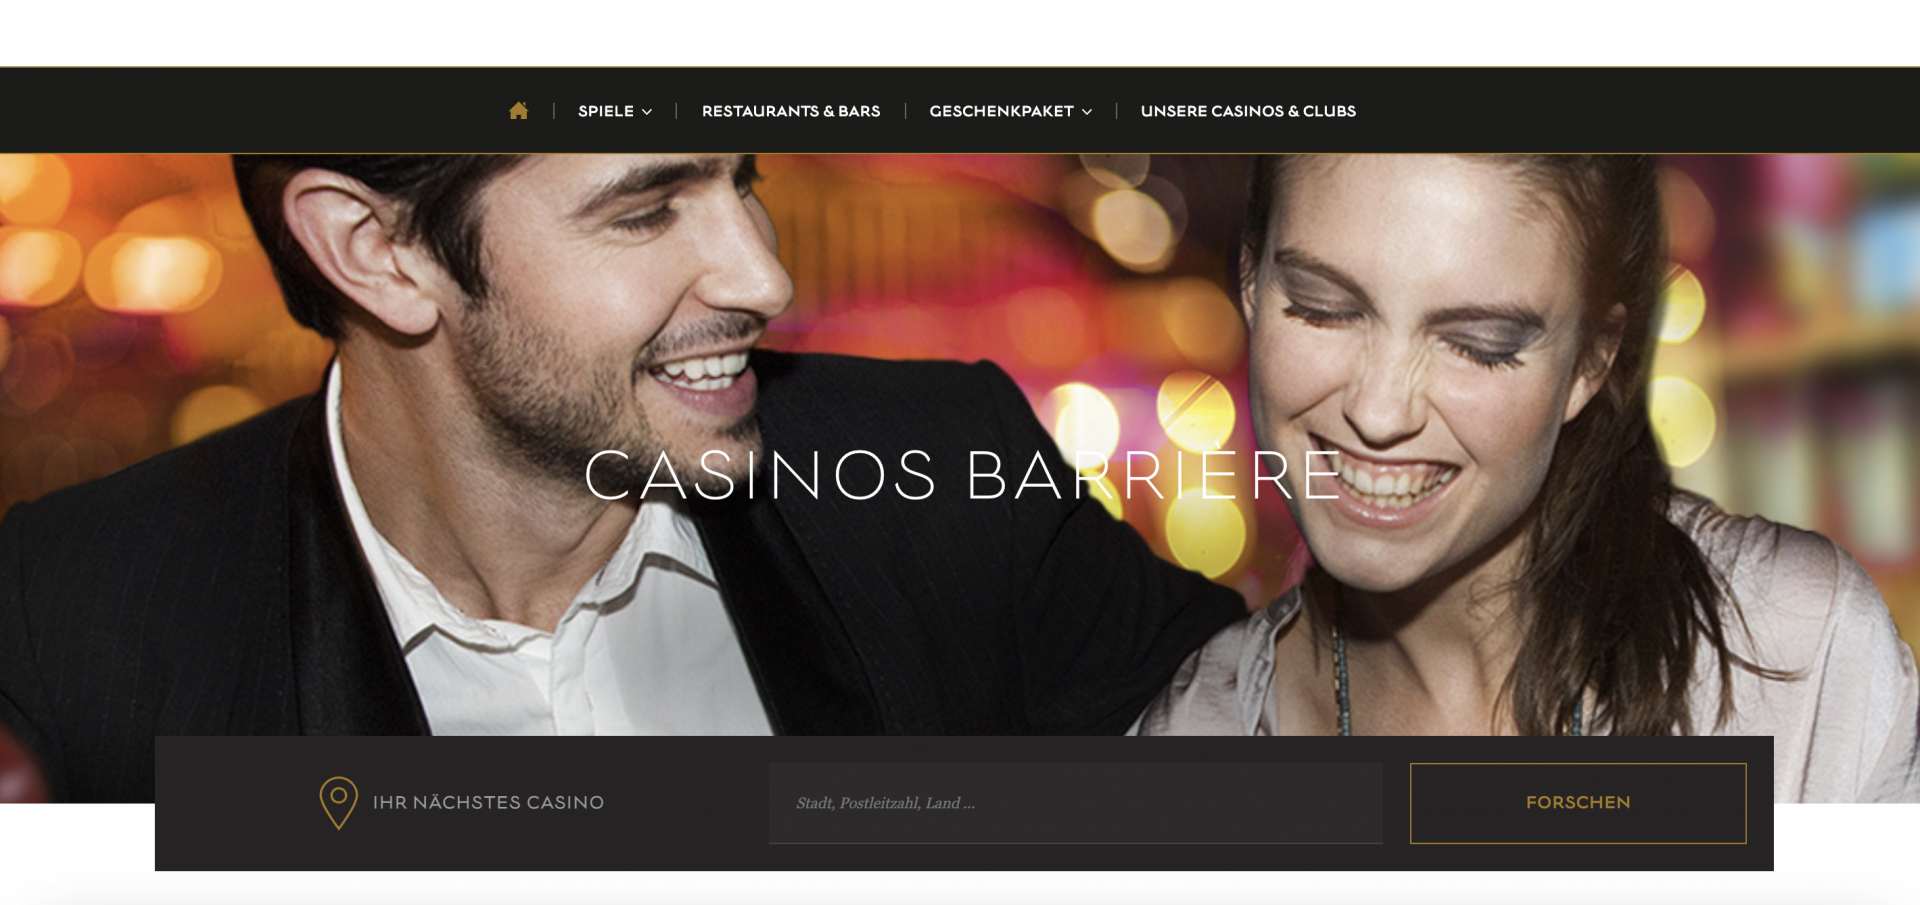 Casino Barriere 1